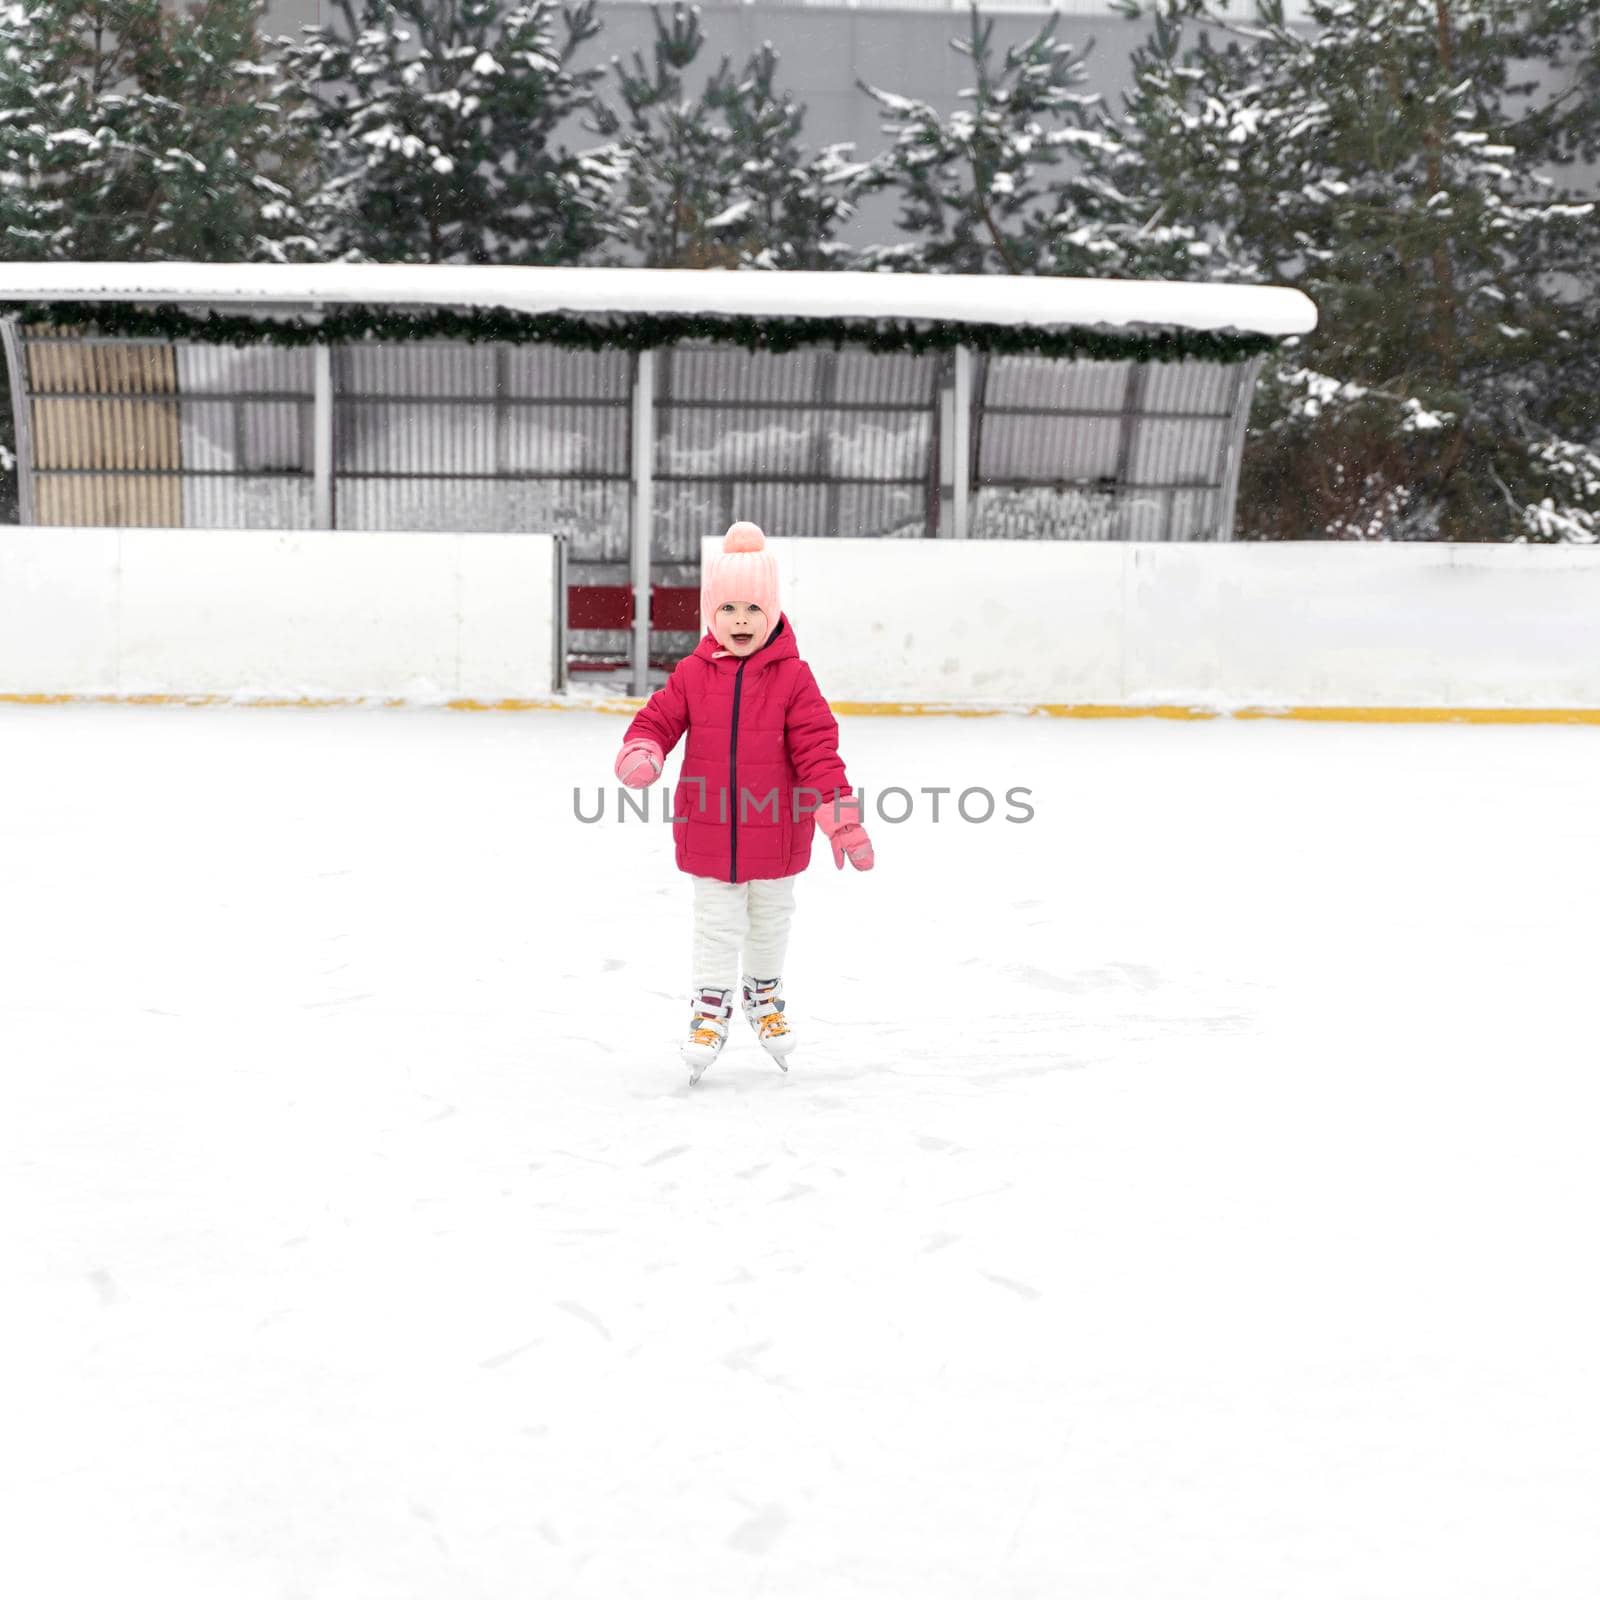 little girl ice skating on the ice rink by Lena_Ogurtsova